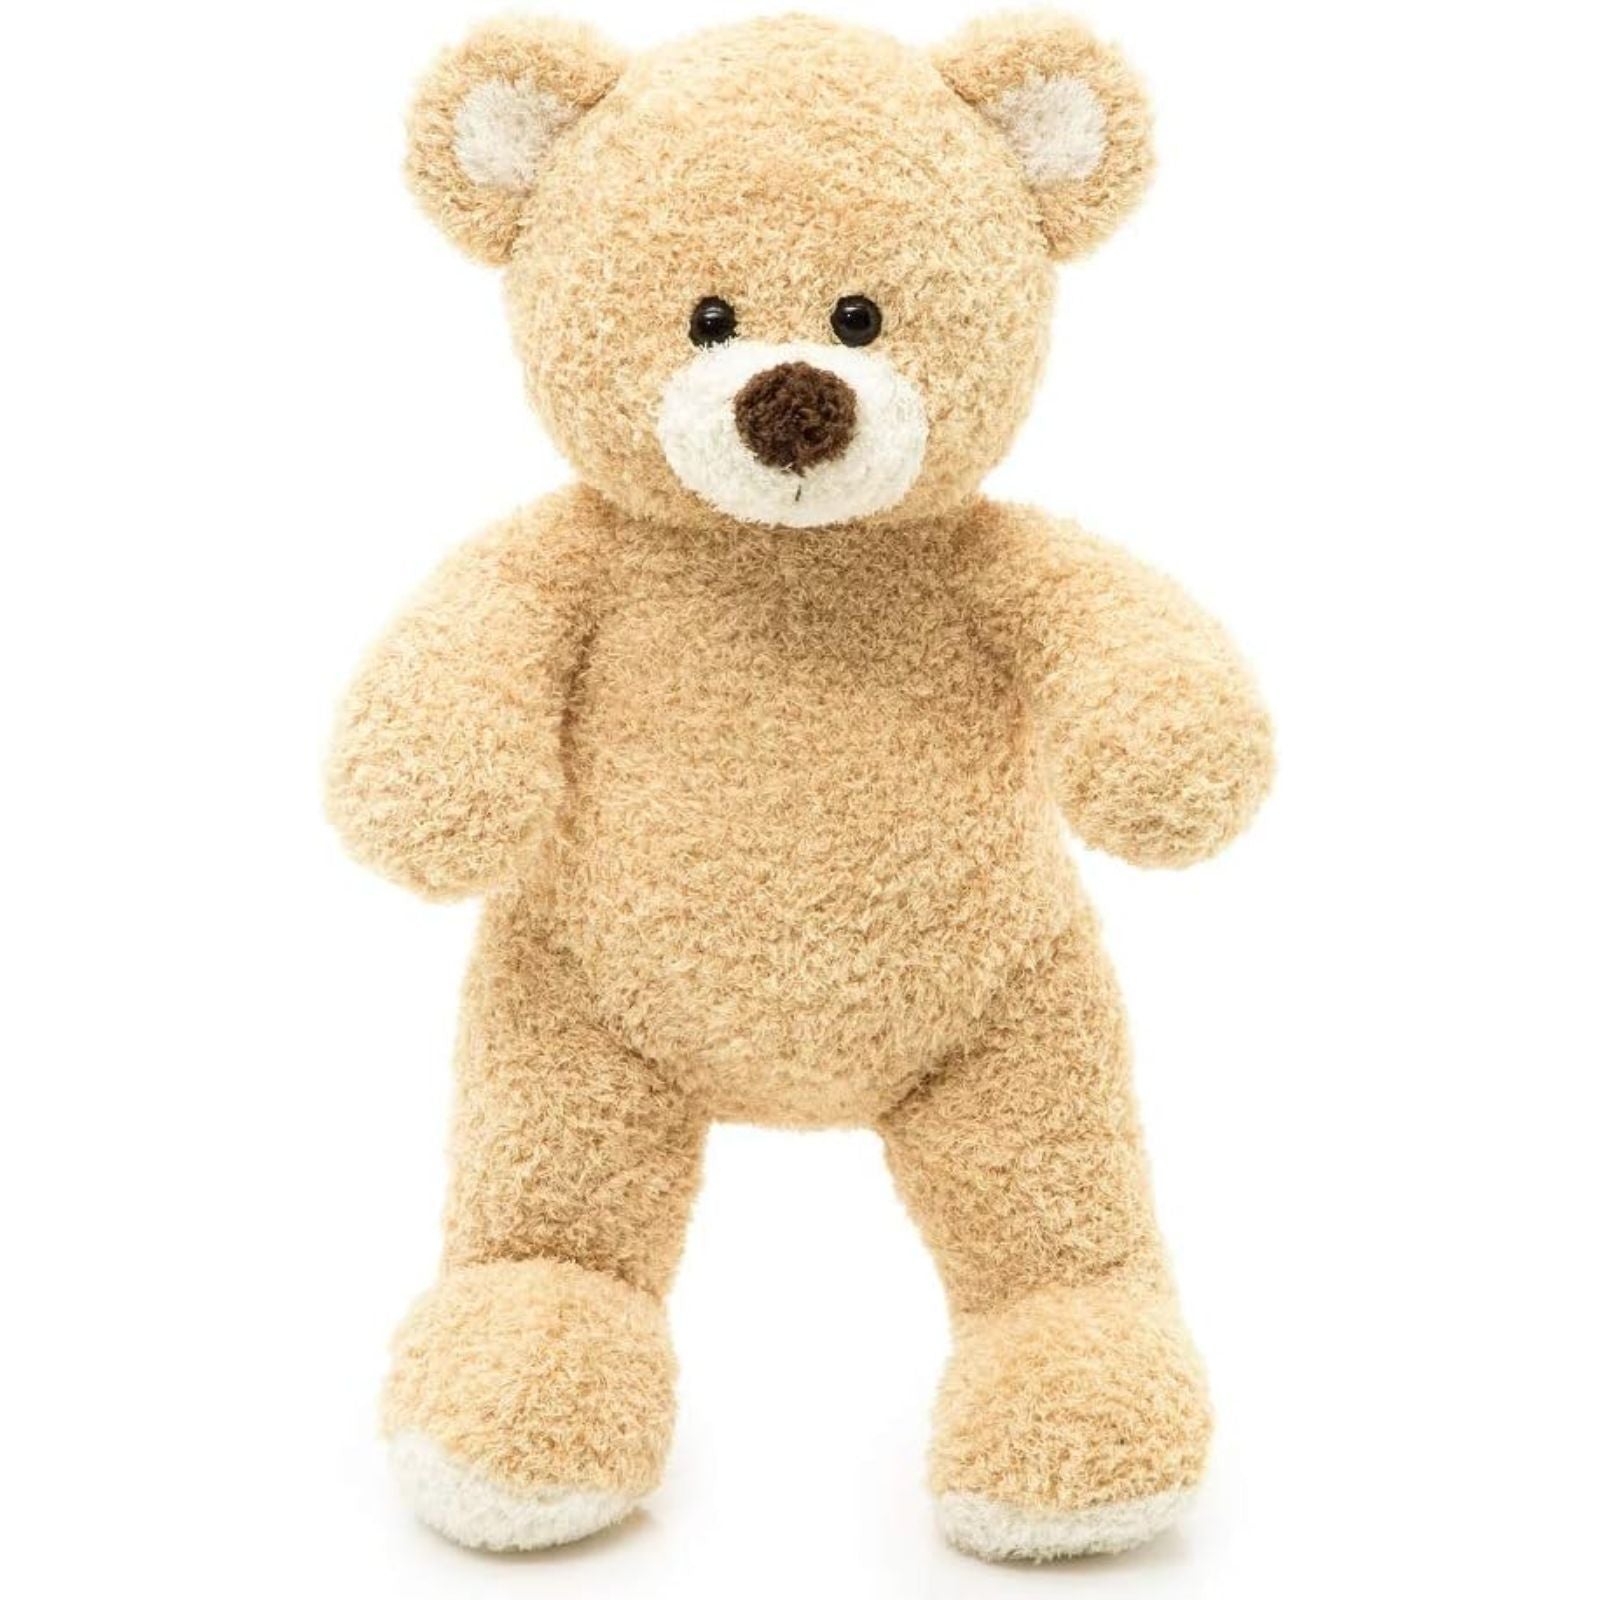 Teddy Bear Plush Toy, Brown, 23 Inches